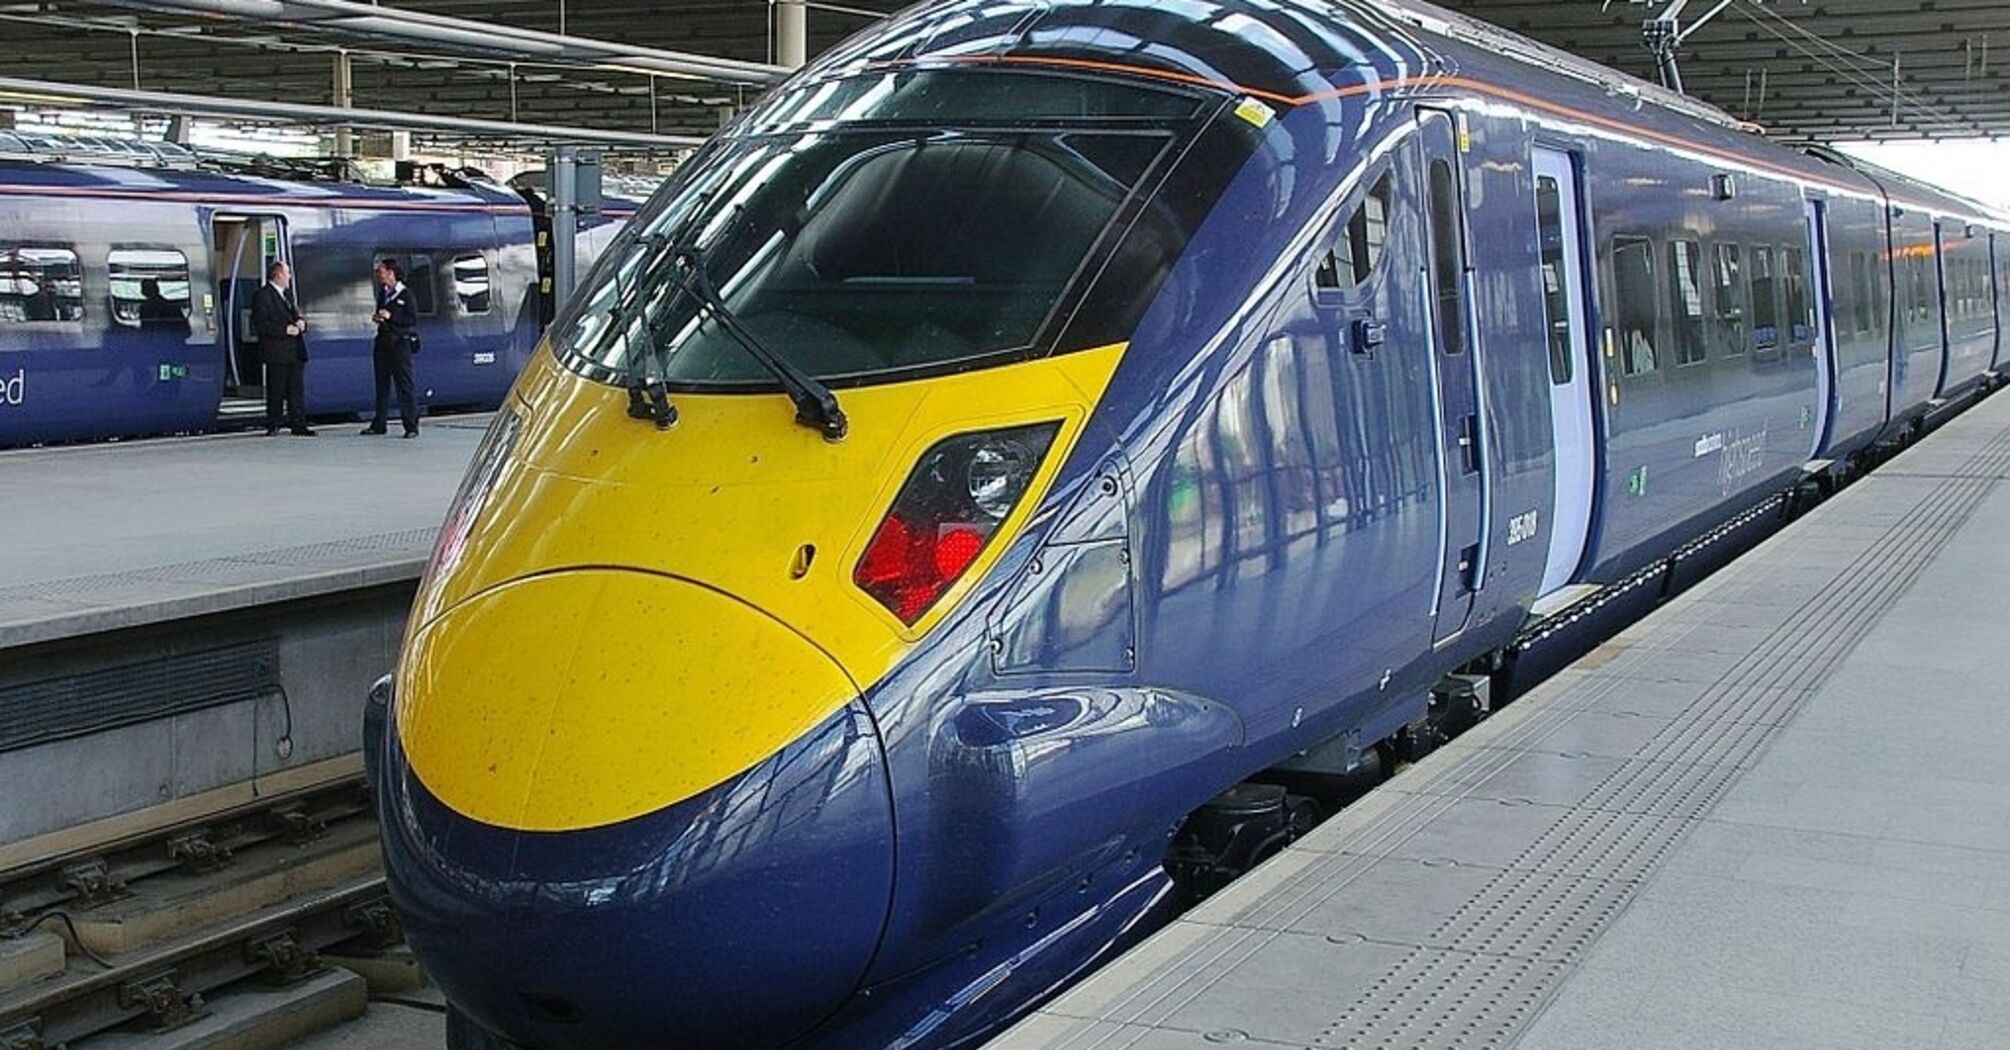 Strikes on the railways in Britain